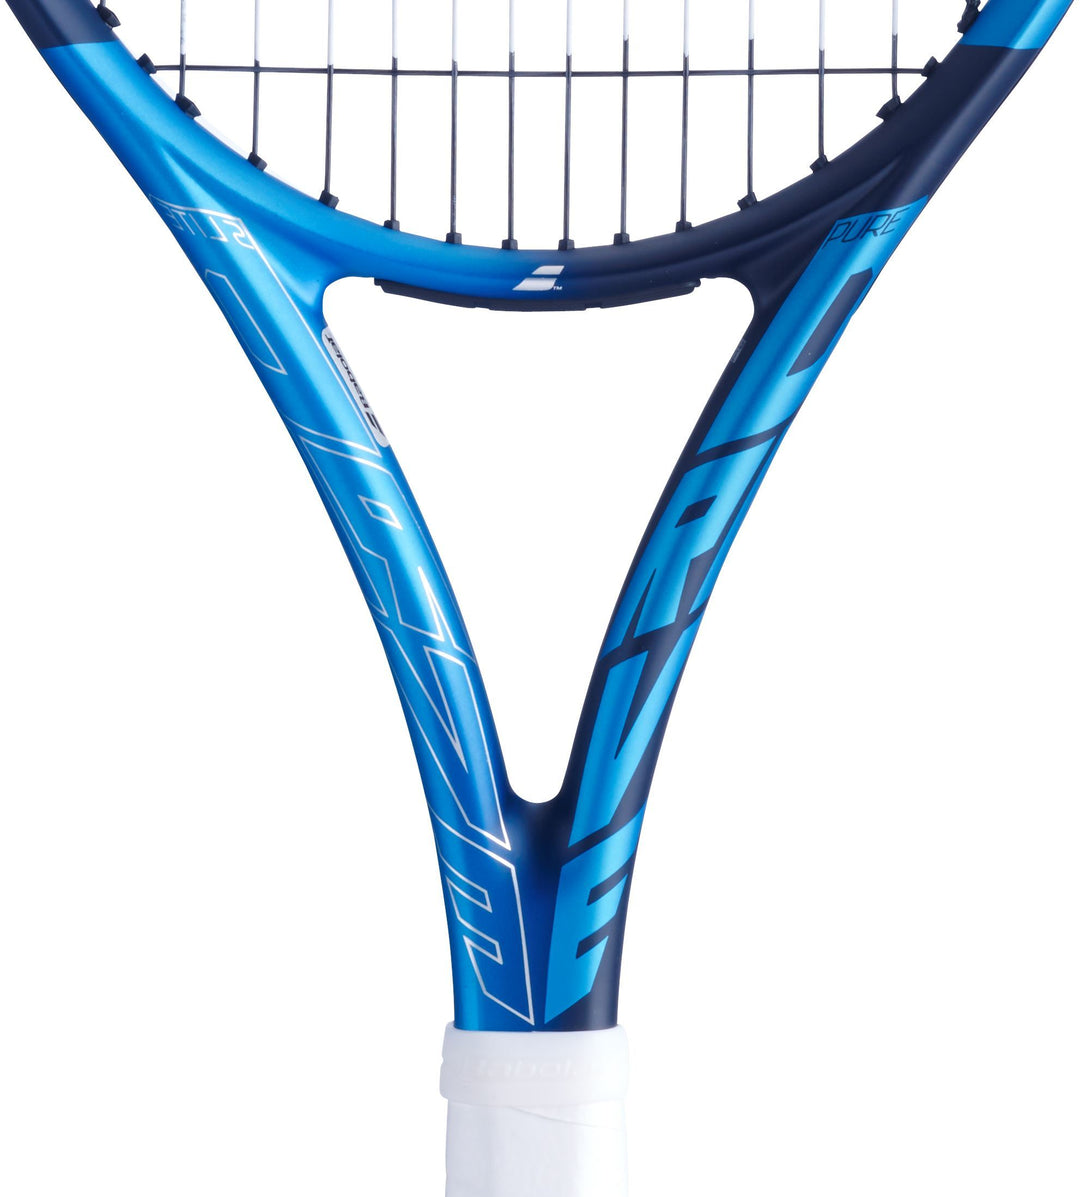 Babolat Pure Drive Super Lite 255g 2021 Tennis Racquet Unstrung Tennis racquets Babolat 